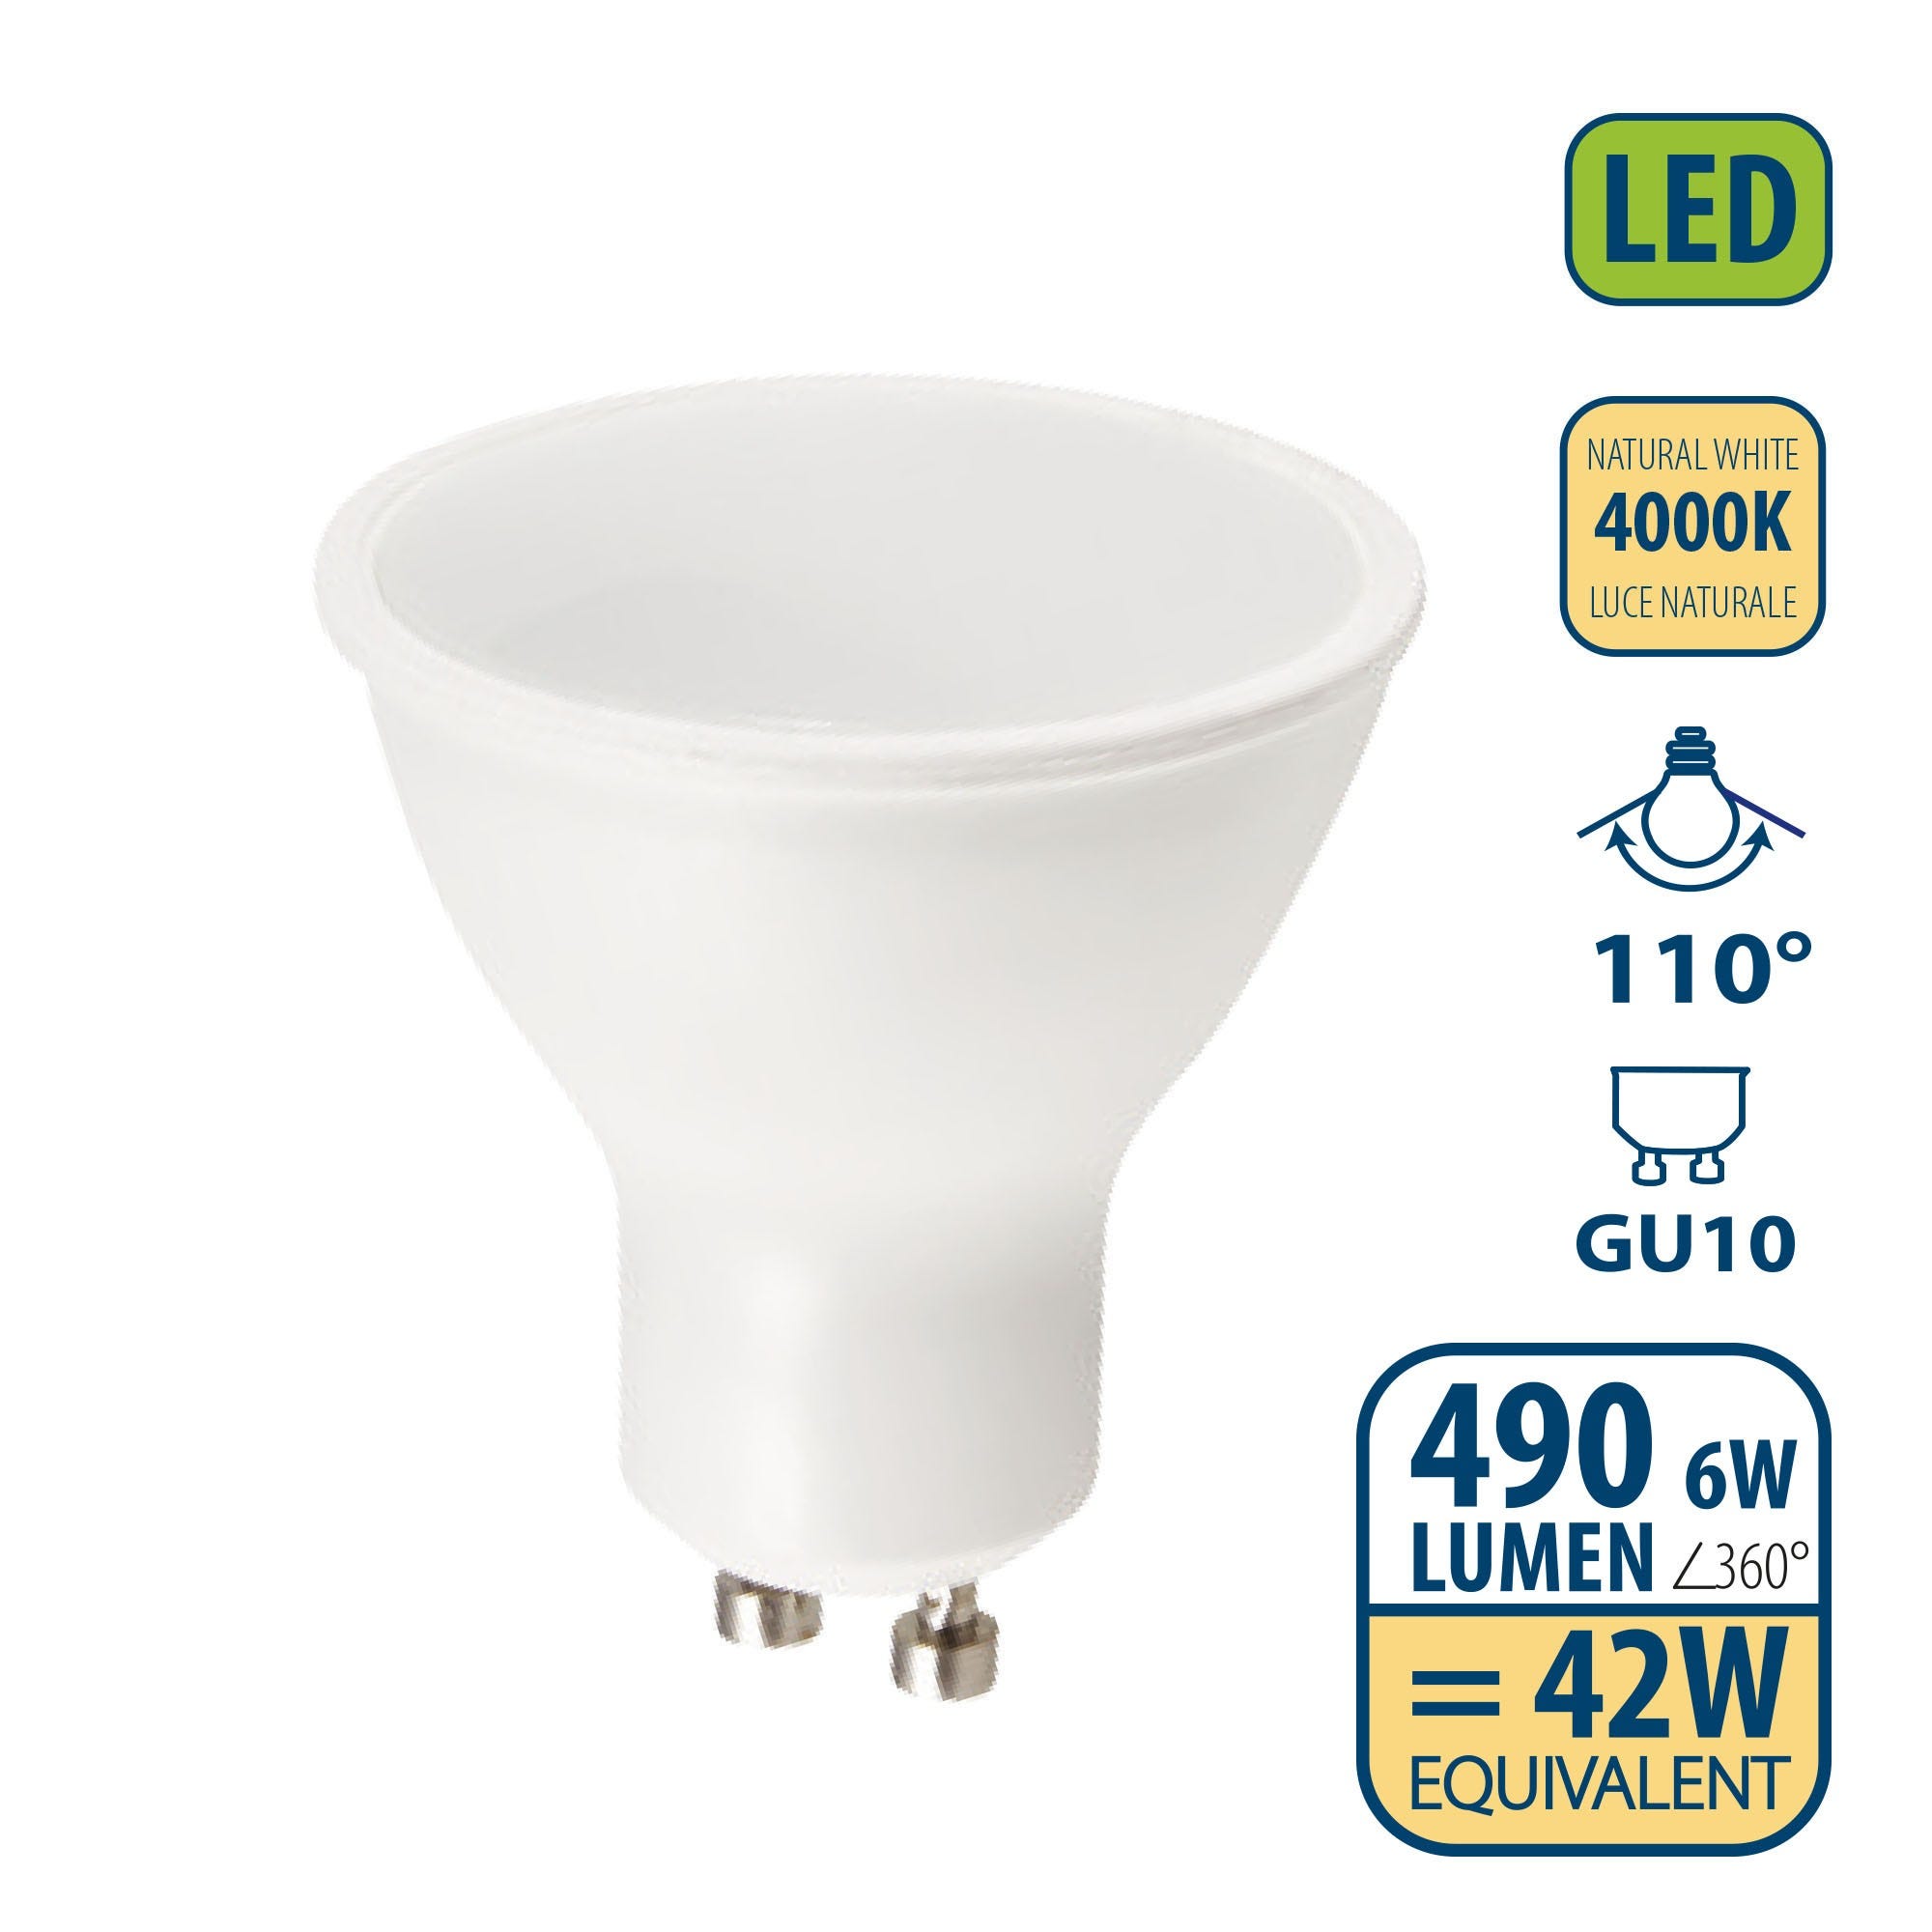 Lampadina SMD LED, Spot attacco GU10, 230V, 6W/490lm, 4000K, 110